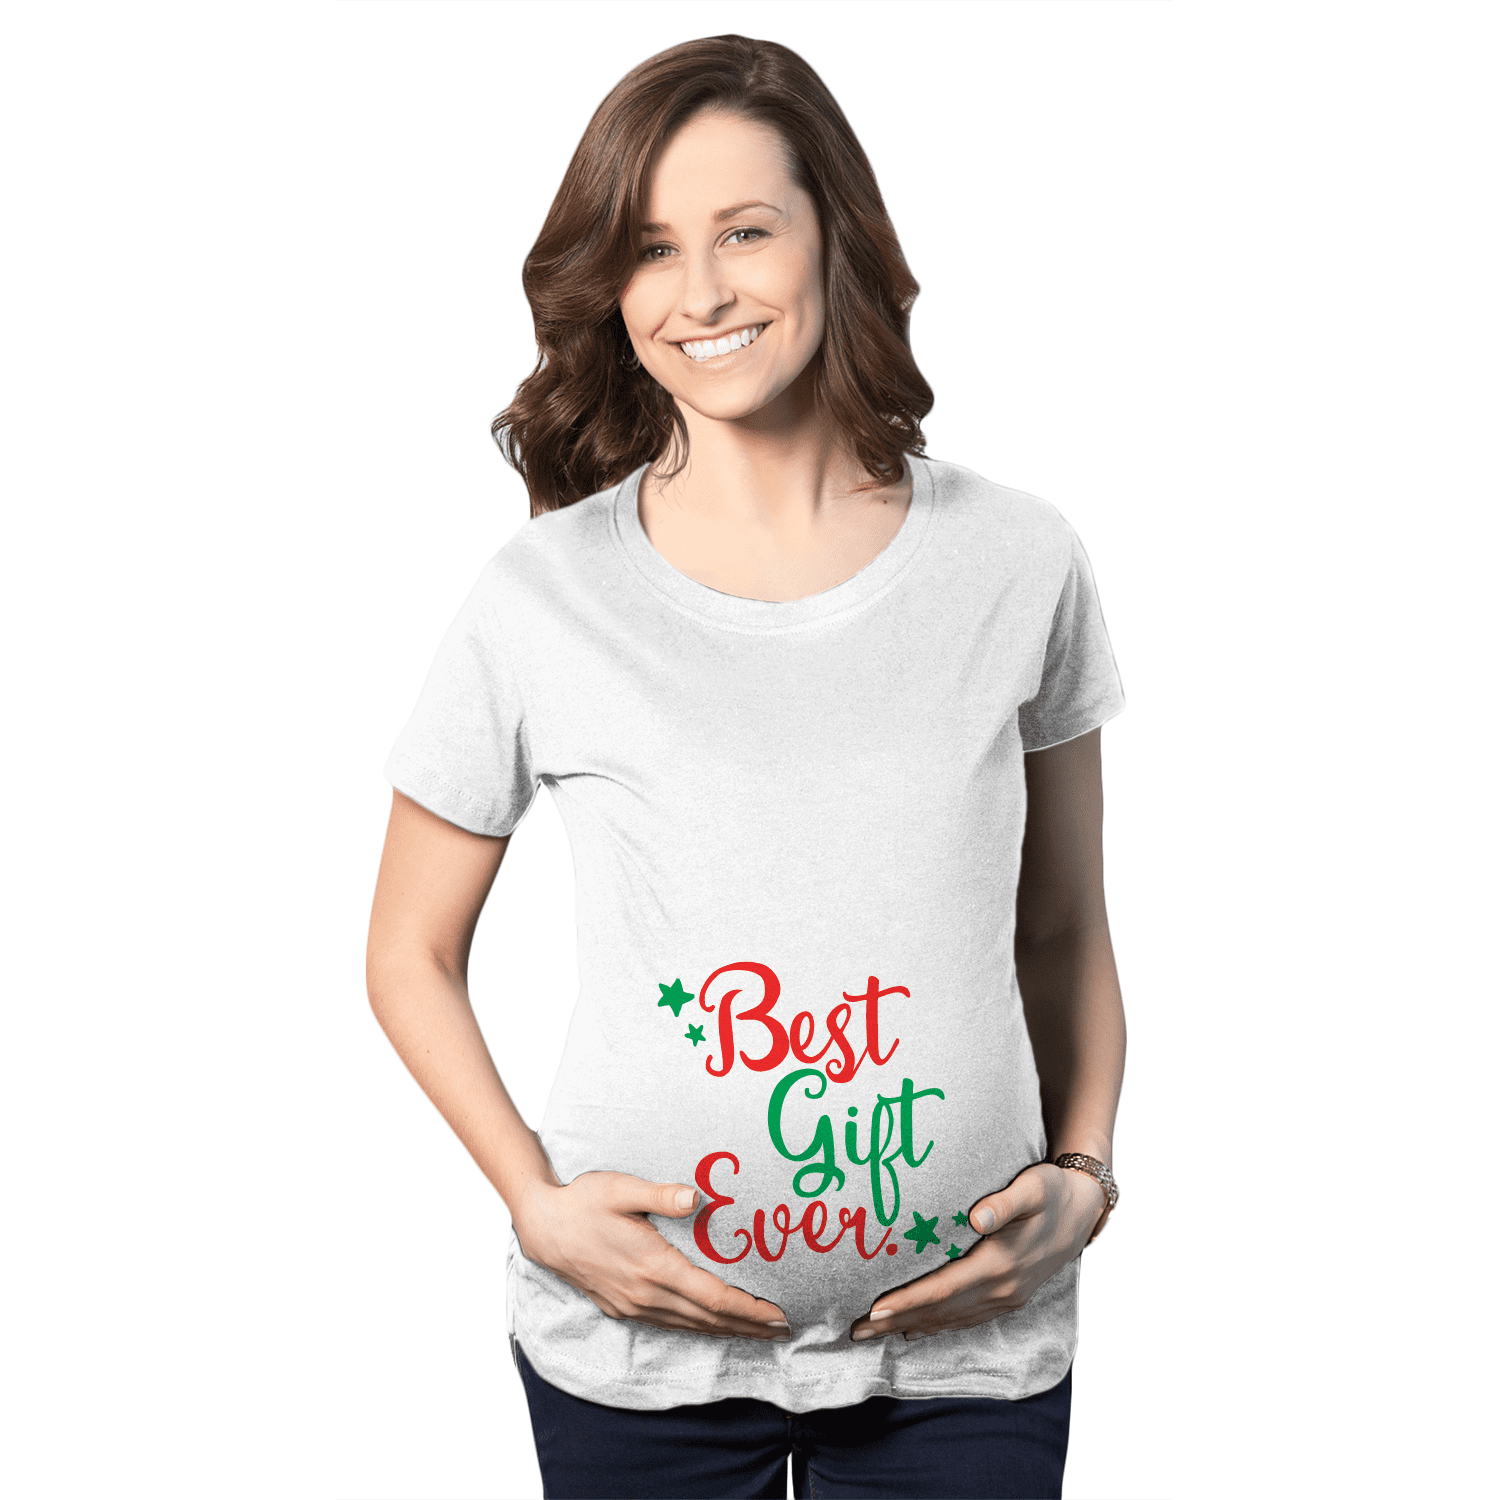 Im Pregnant Shirt Pregnancy Announcement for friend Best Friend Pregnant Gift Funny Pregnancy Shirt Maternity Shirt Pregnancy Gift Box